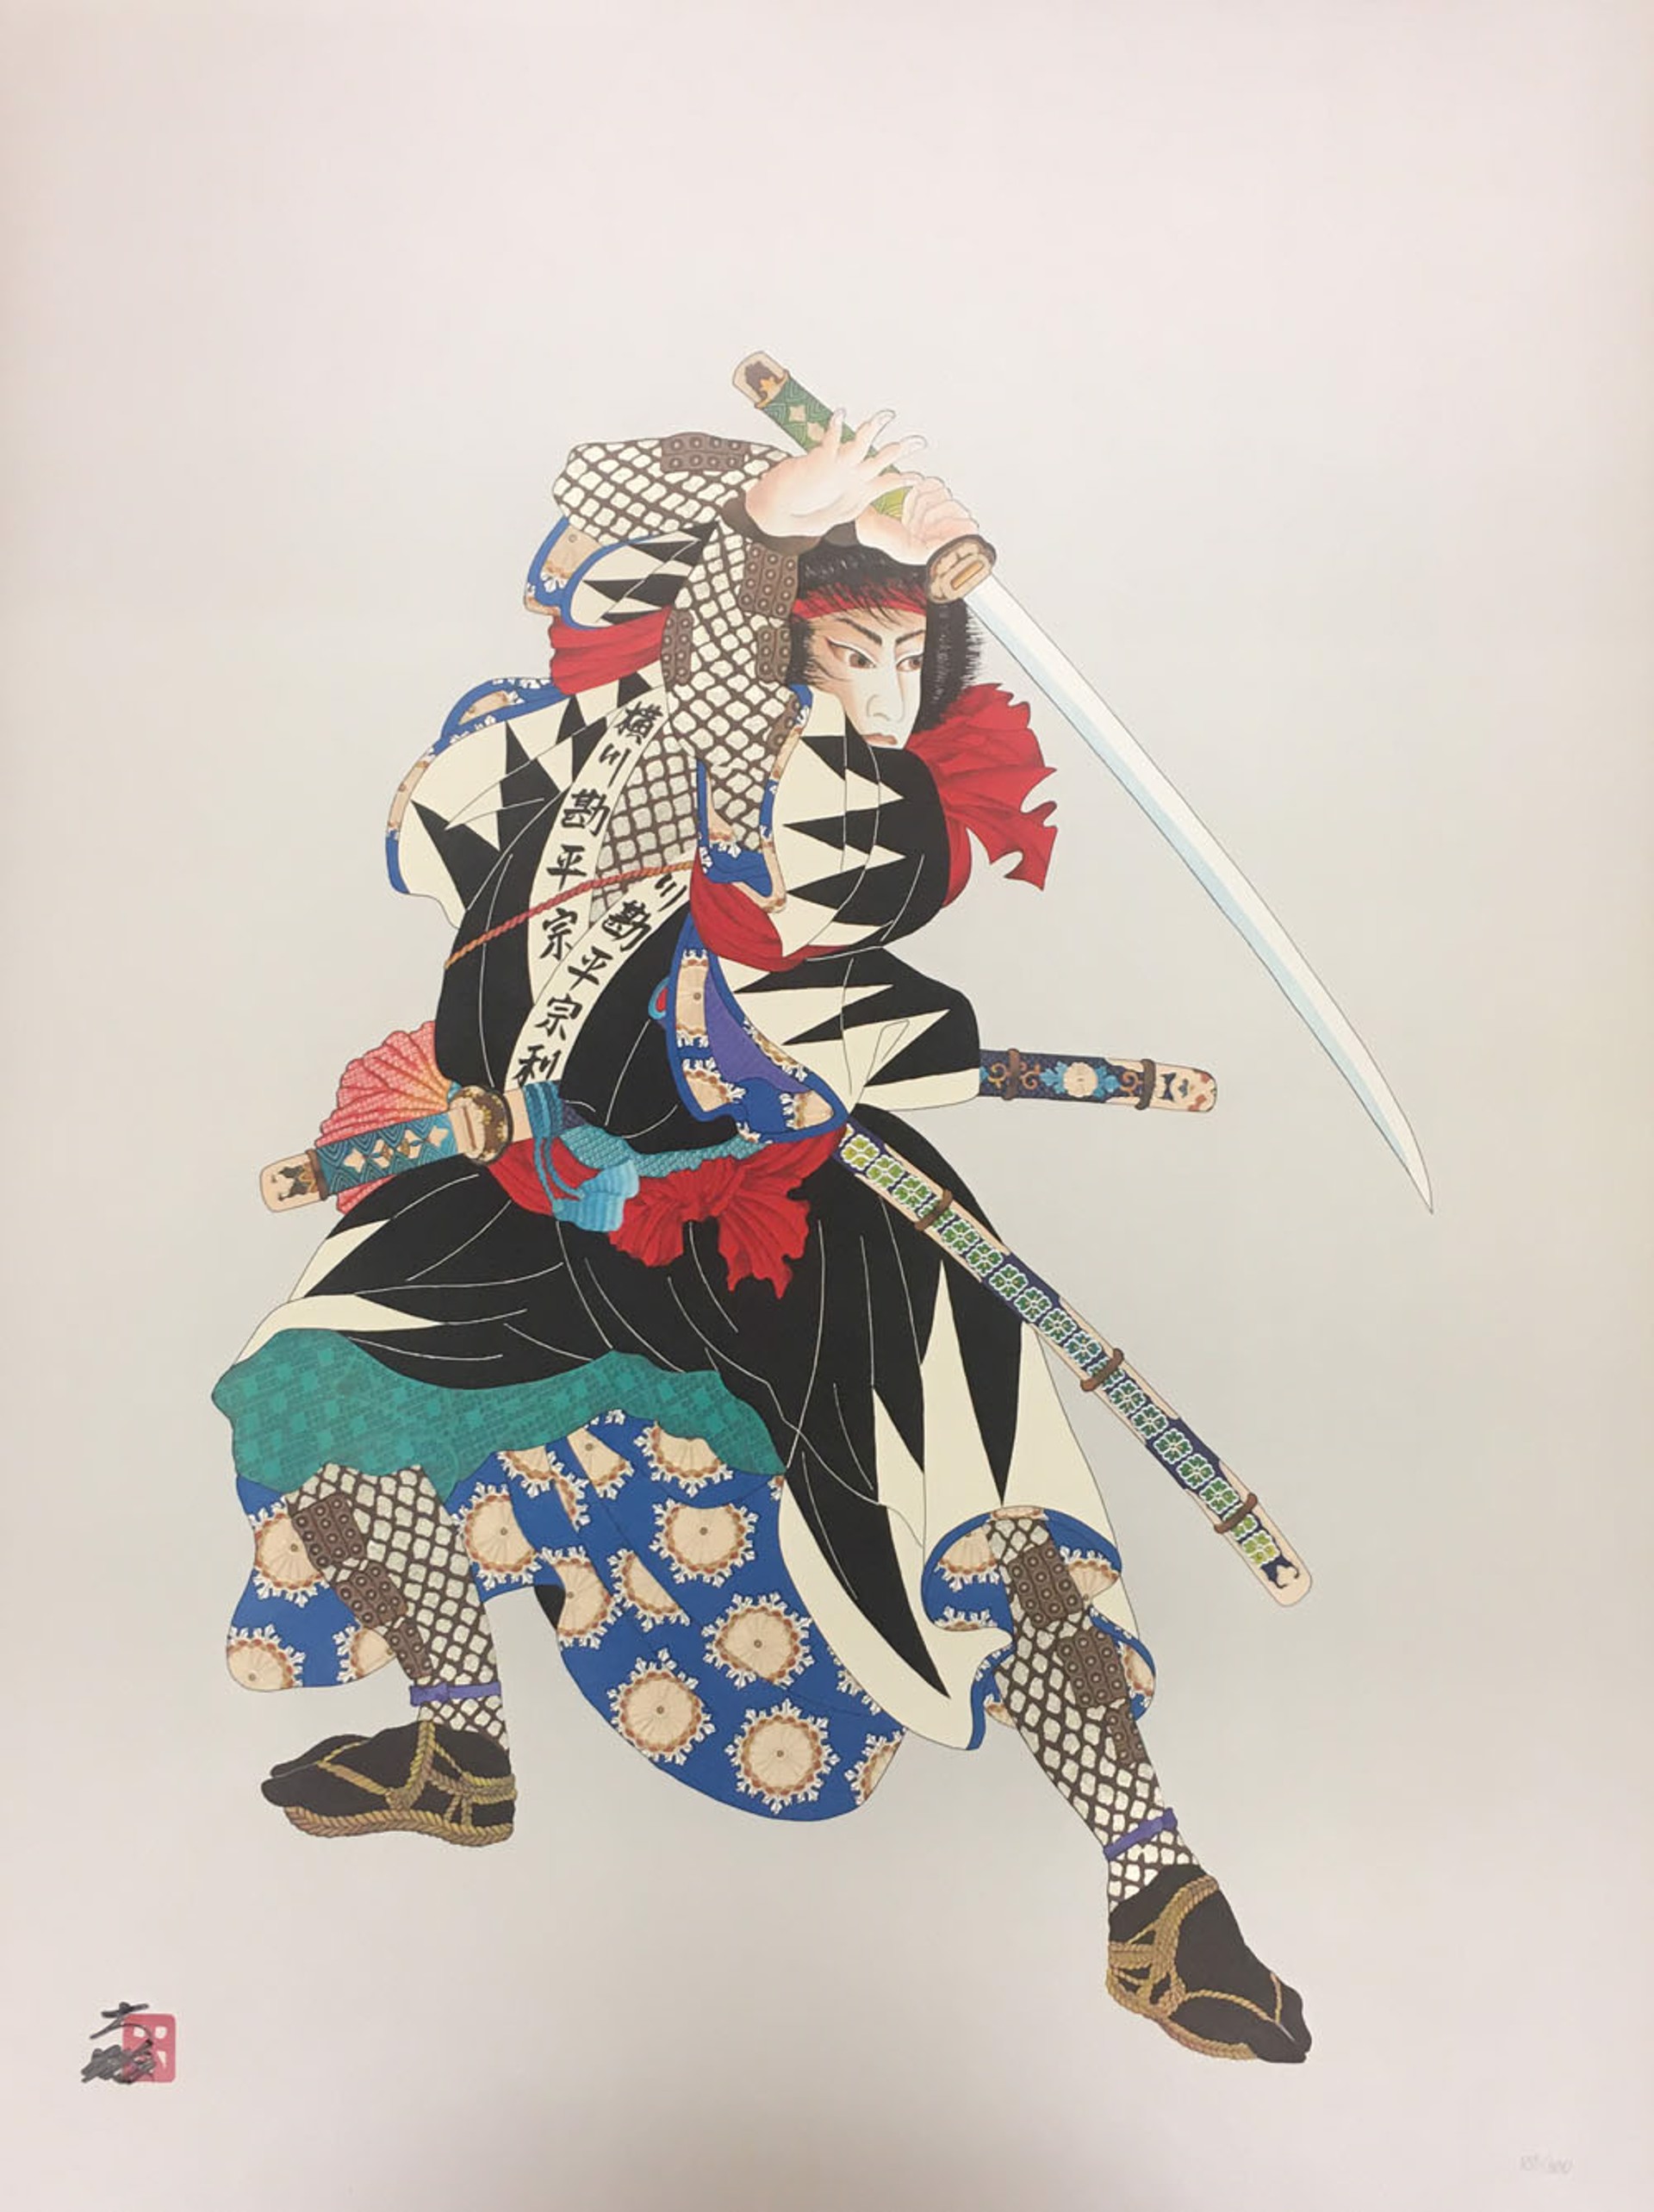 Sword Of Courage by Hisashi Otsuka